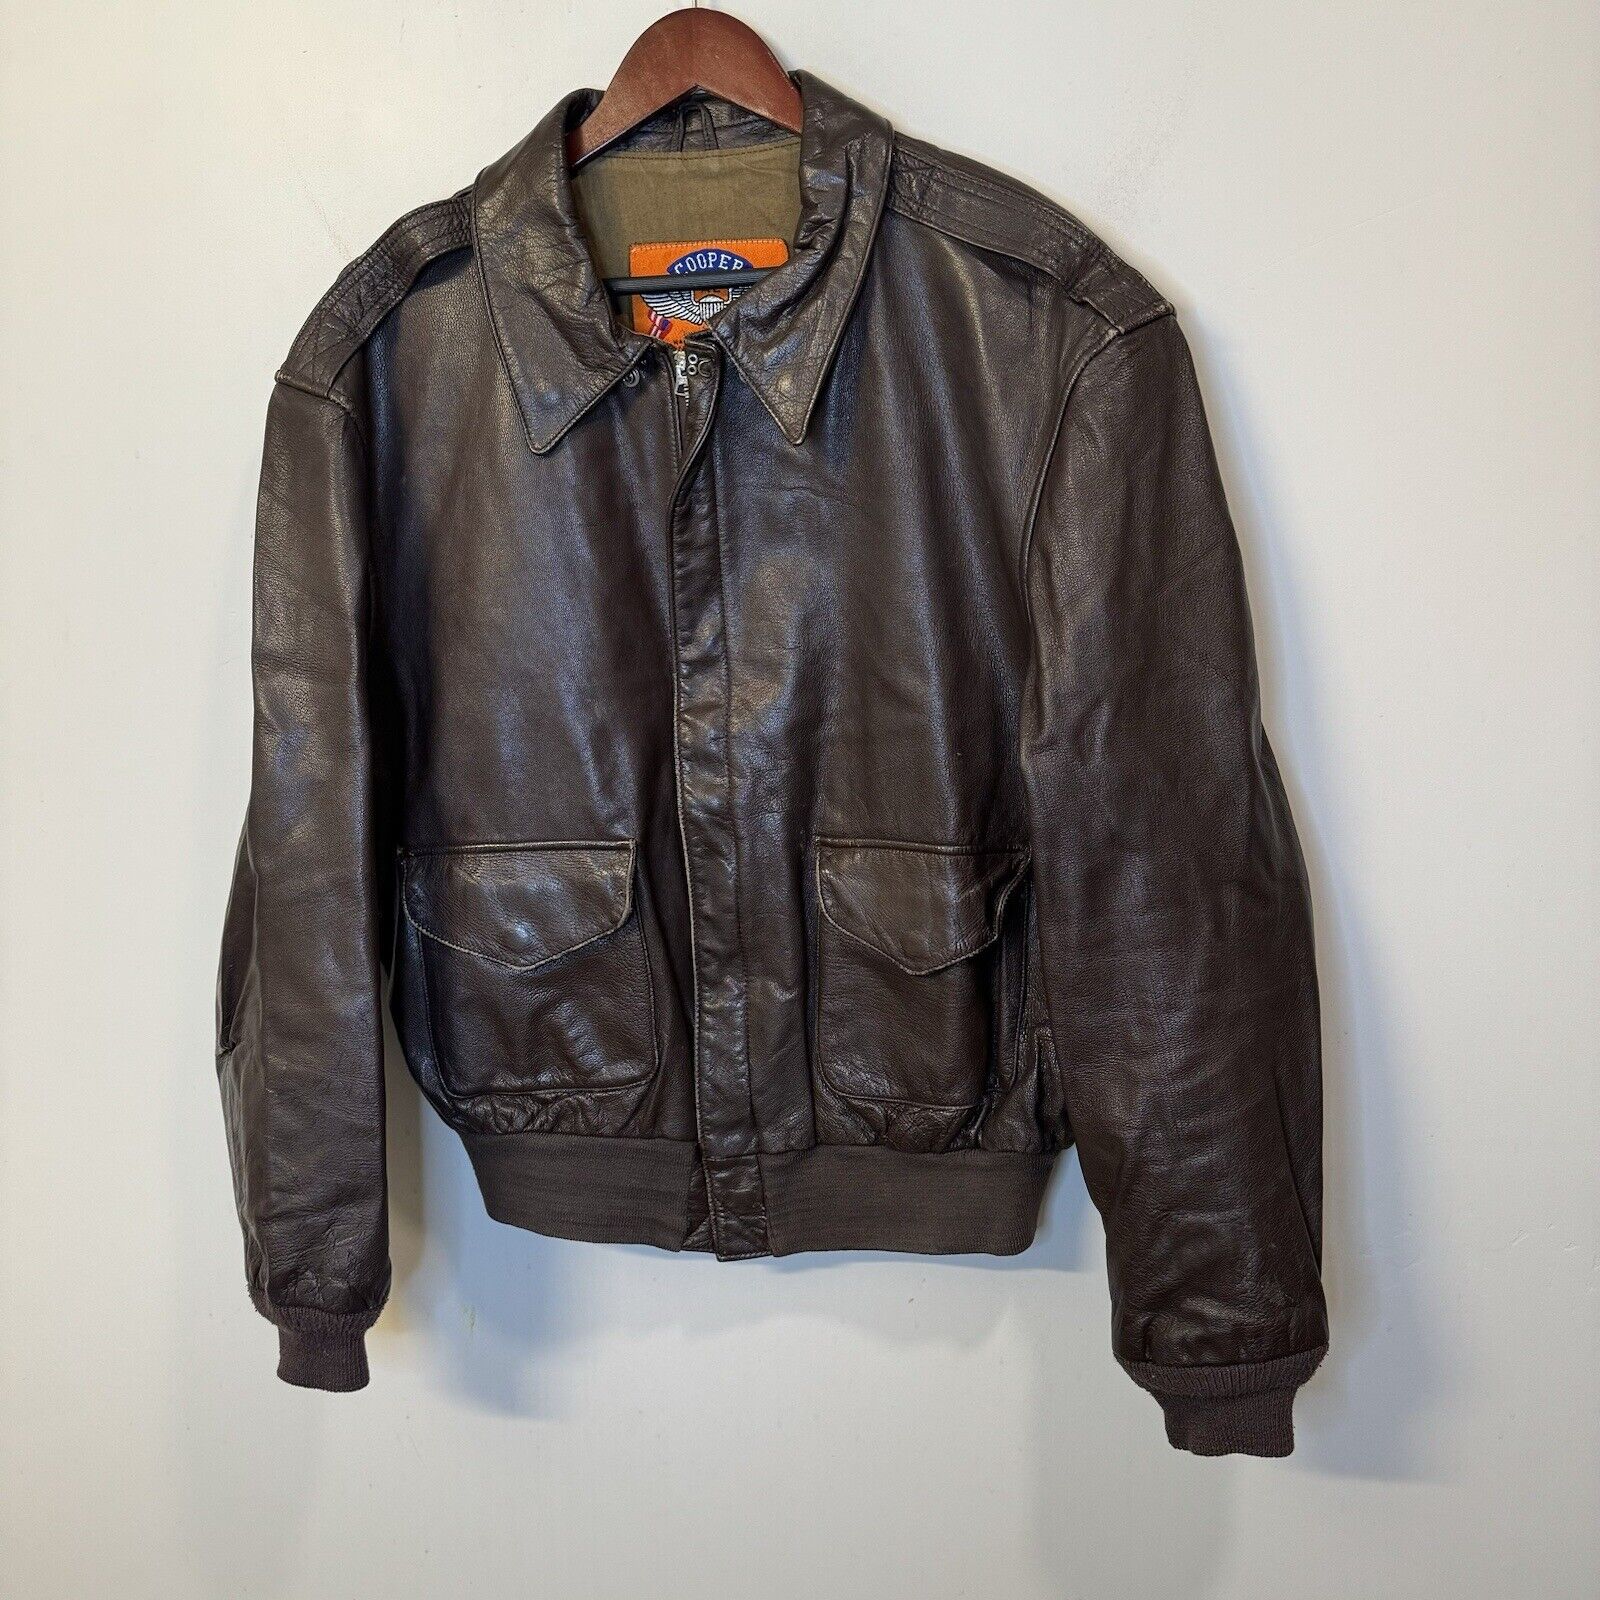 Vintage Cooper Jacket Mens 46L Brown Type A2 Flight Bomber Leather Military Coat